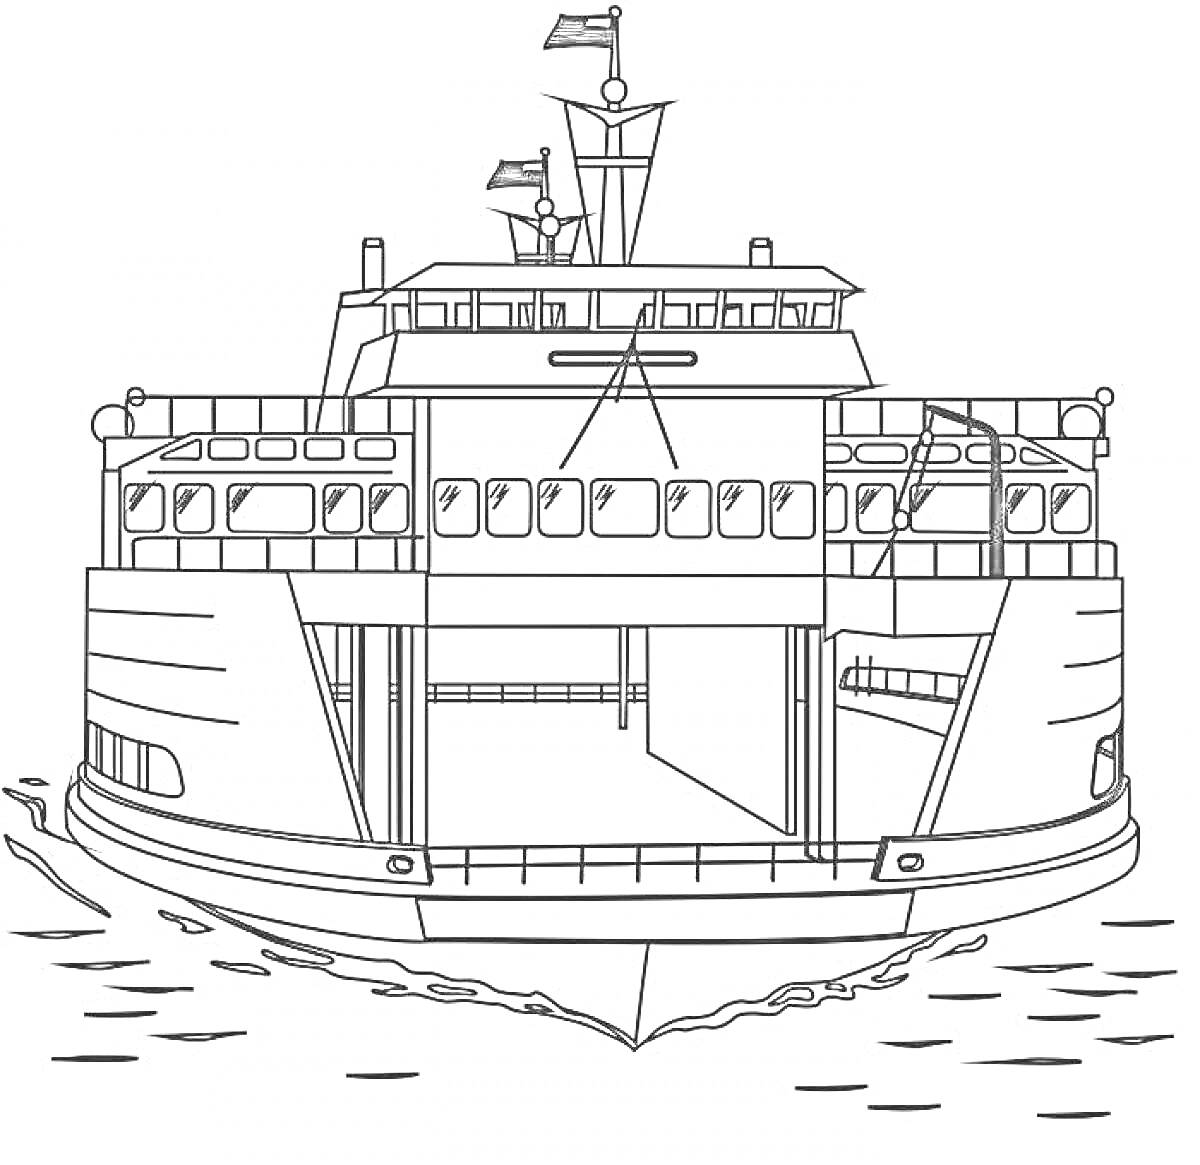 На раскраске изображено: Буксир, Судно, Корабль, Море, Антенны, Окна, Палуба, Флаг